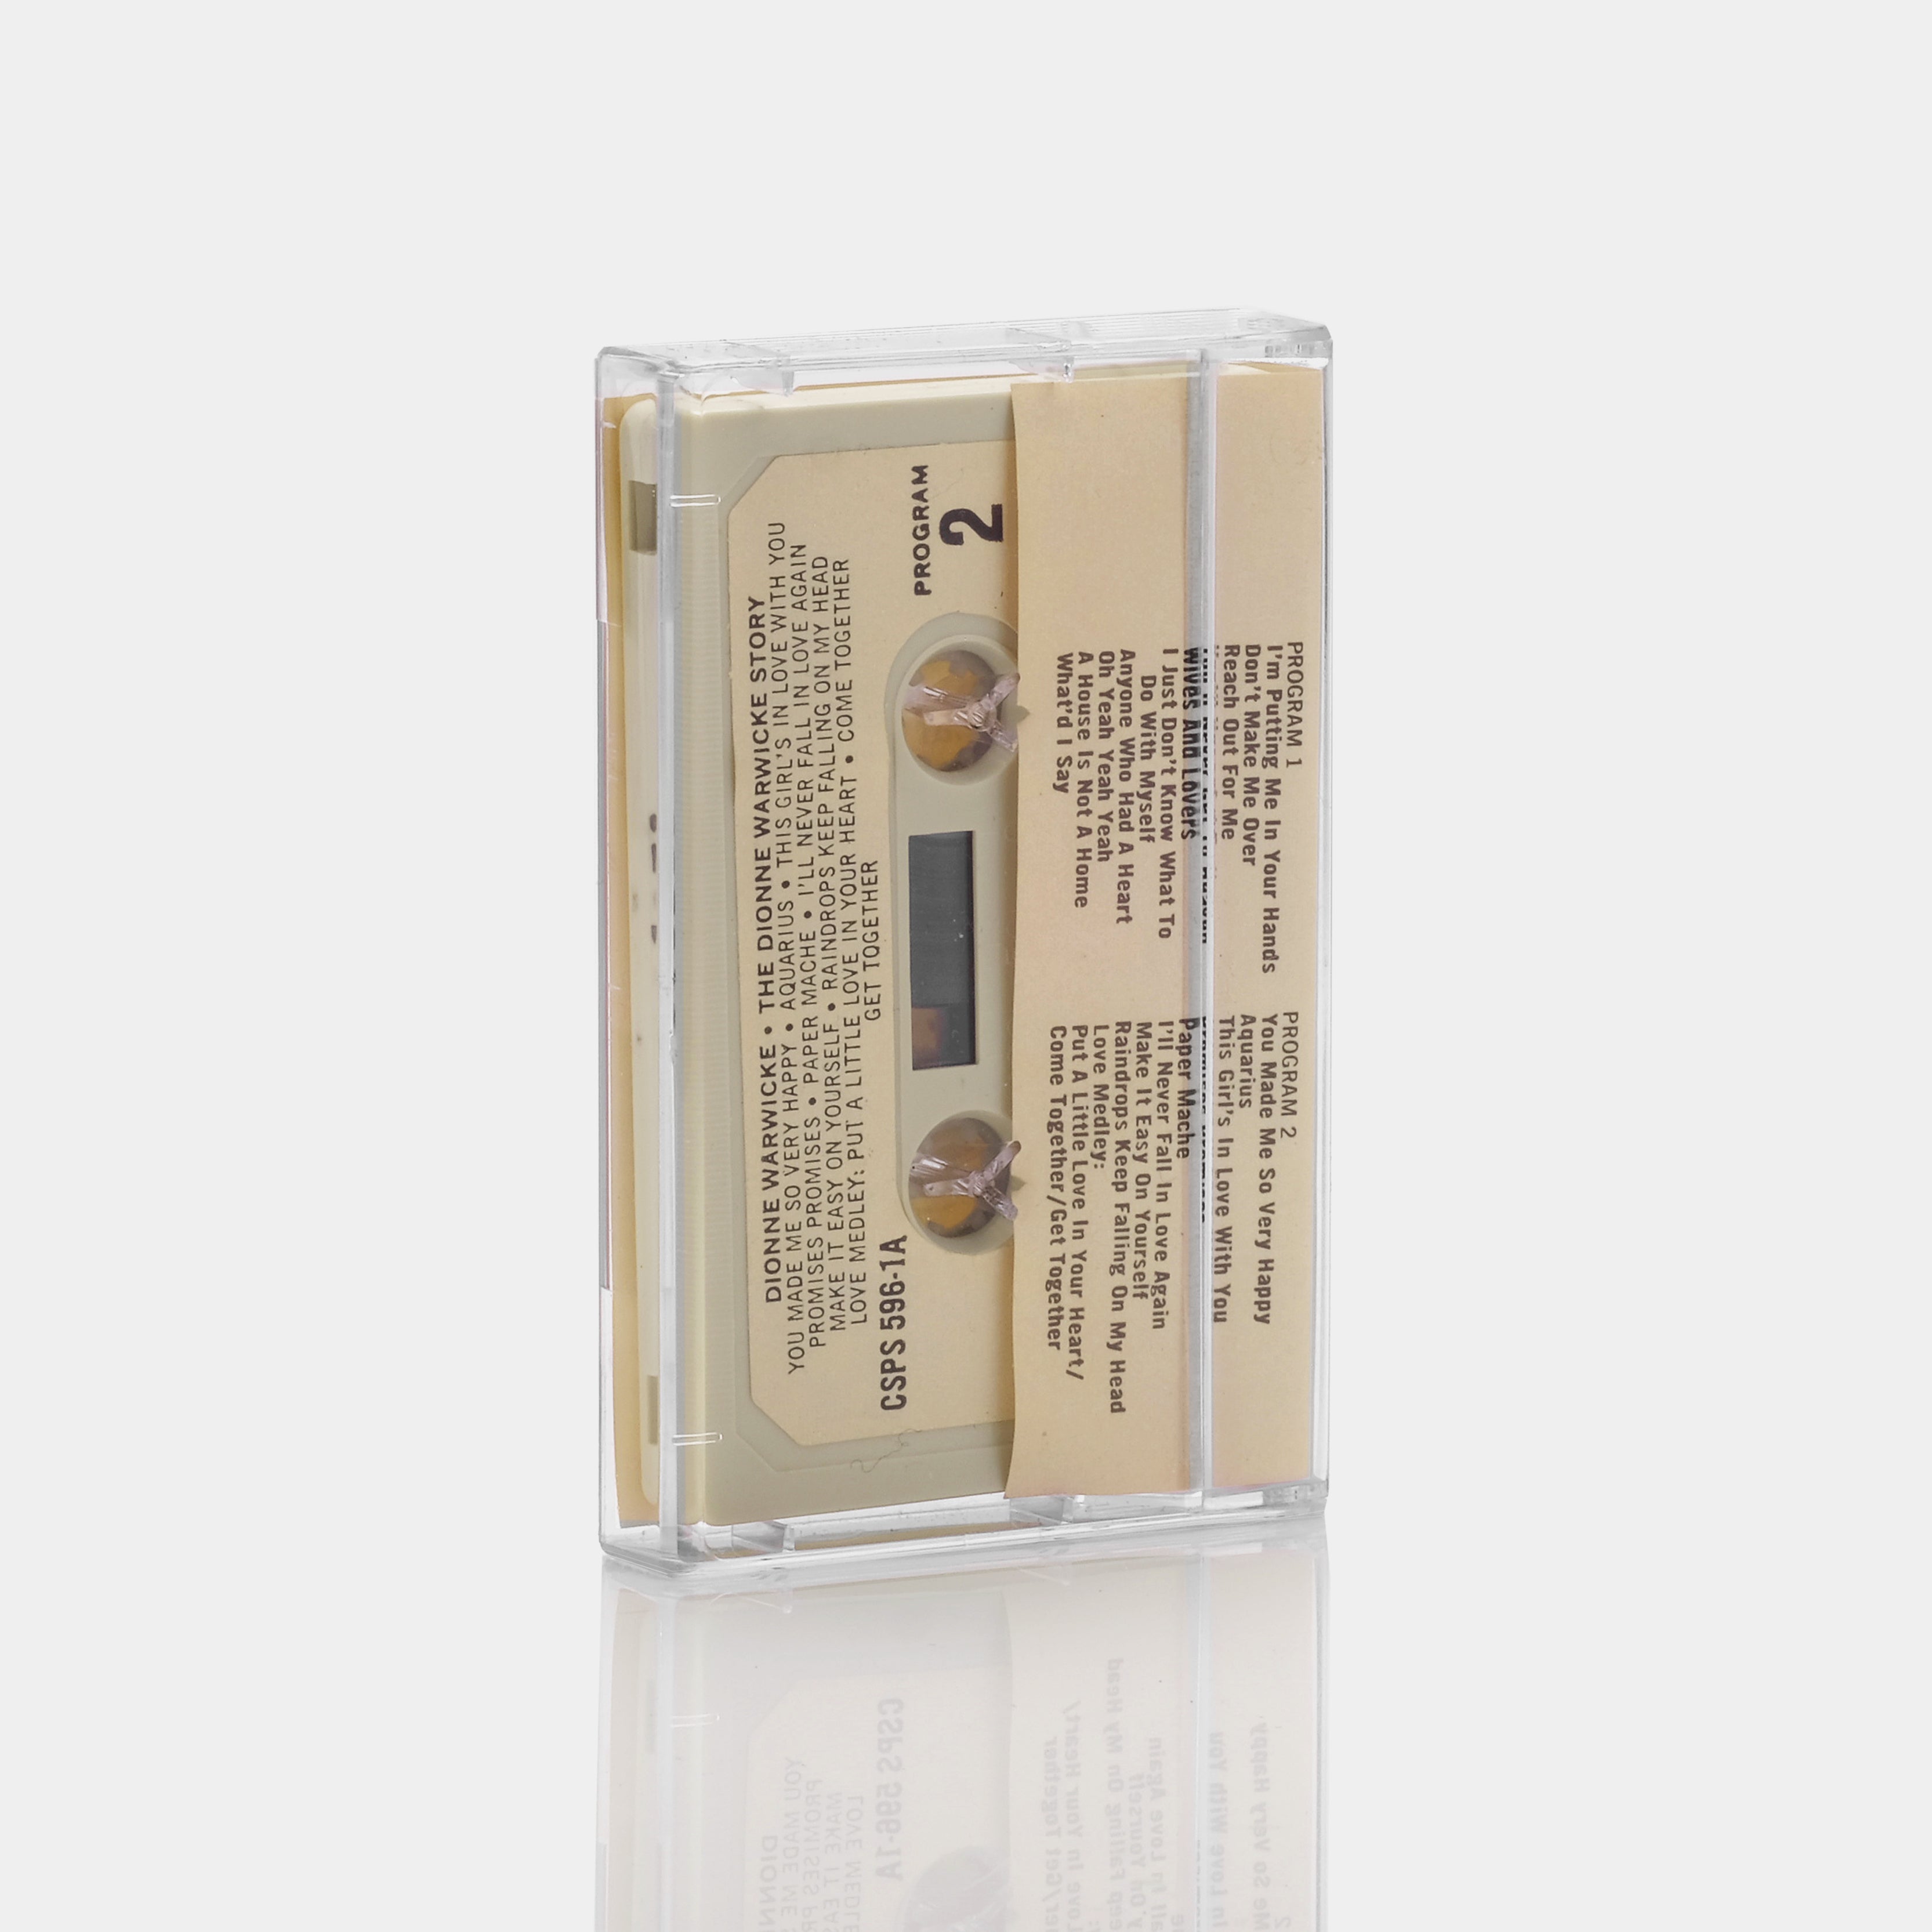 Dionne Warwicke - The Dionne Warwicke Story (A Decade Of Gold) Volume 1 Cassette Tape